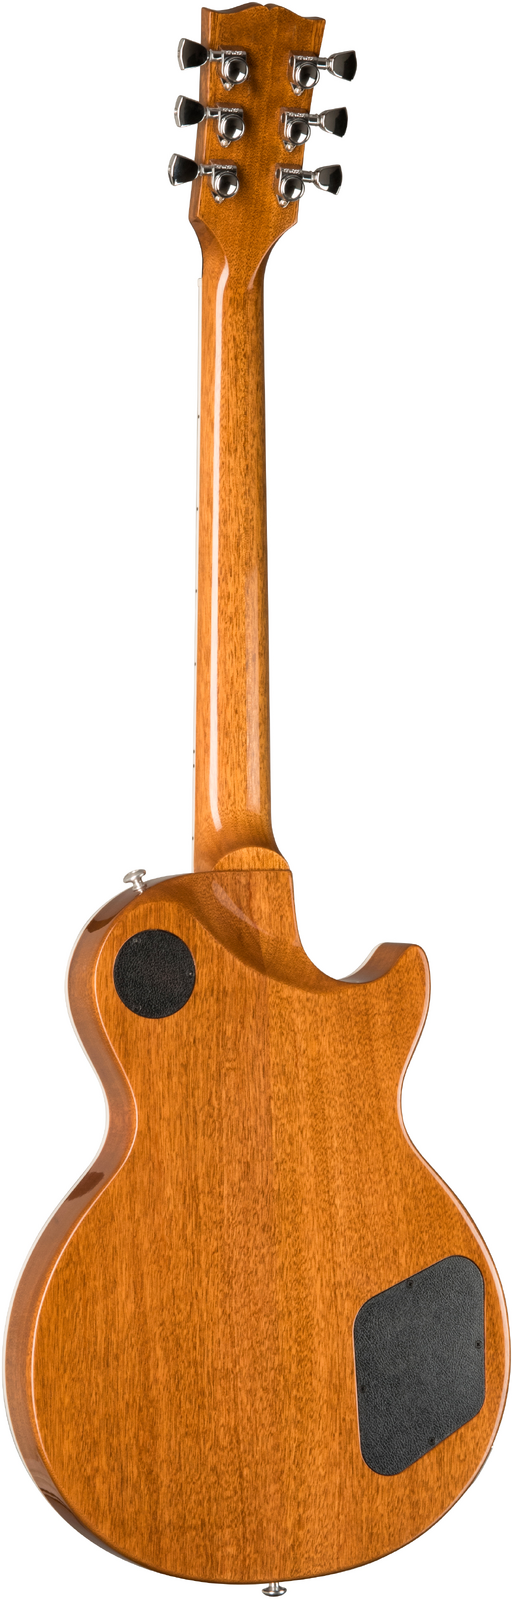 Gibson Les Paul Modern Left Handed Sparkling Burgundy Top